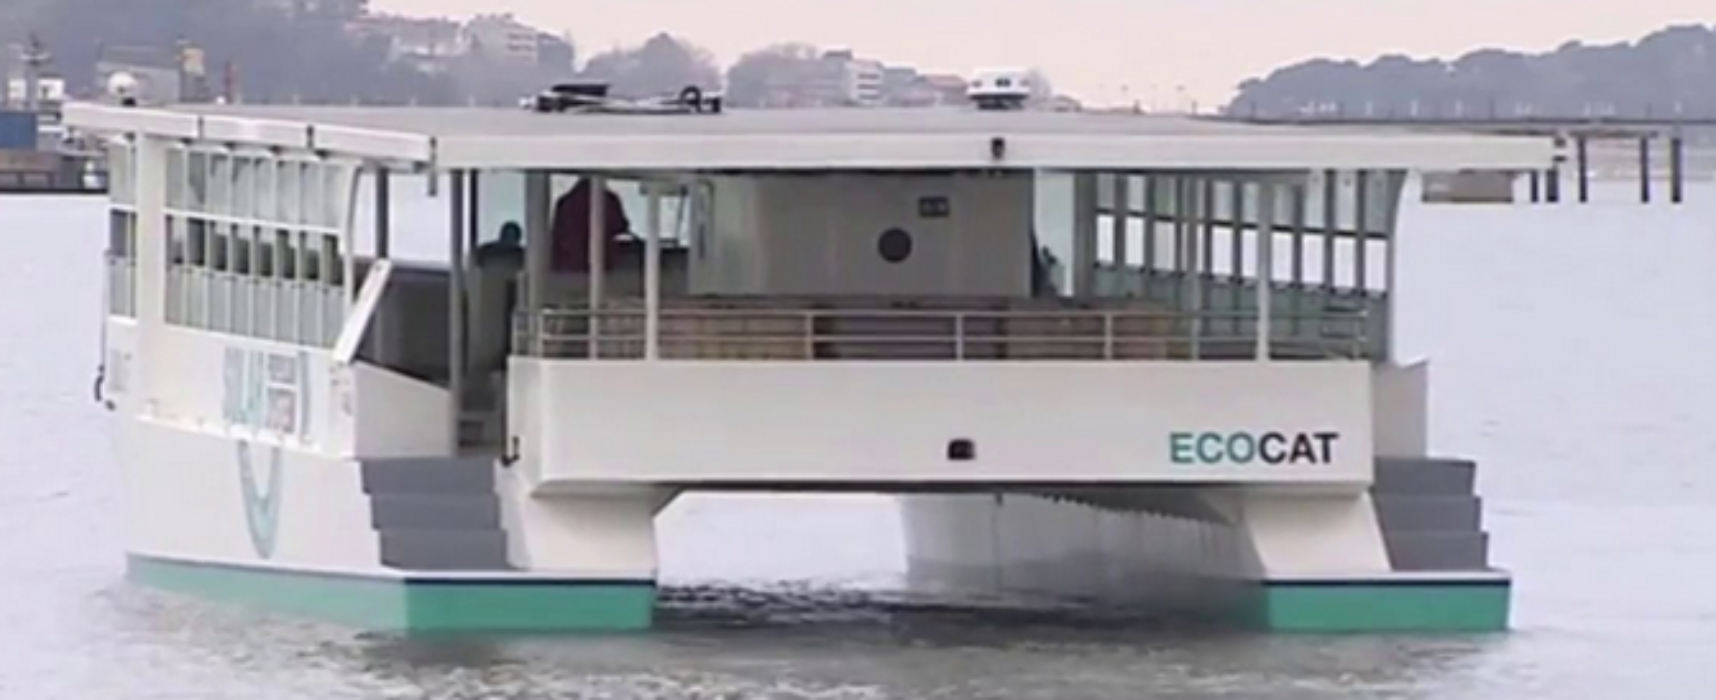 Construido en Cantabria el primer barco de pasajeros con energía electrosolar de Europa